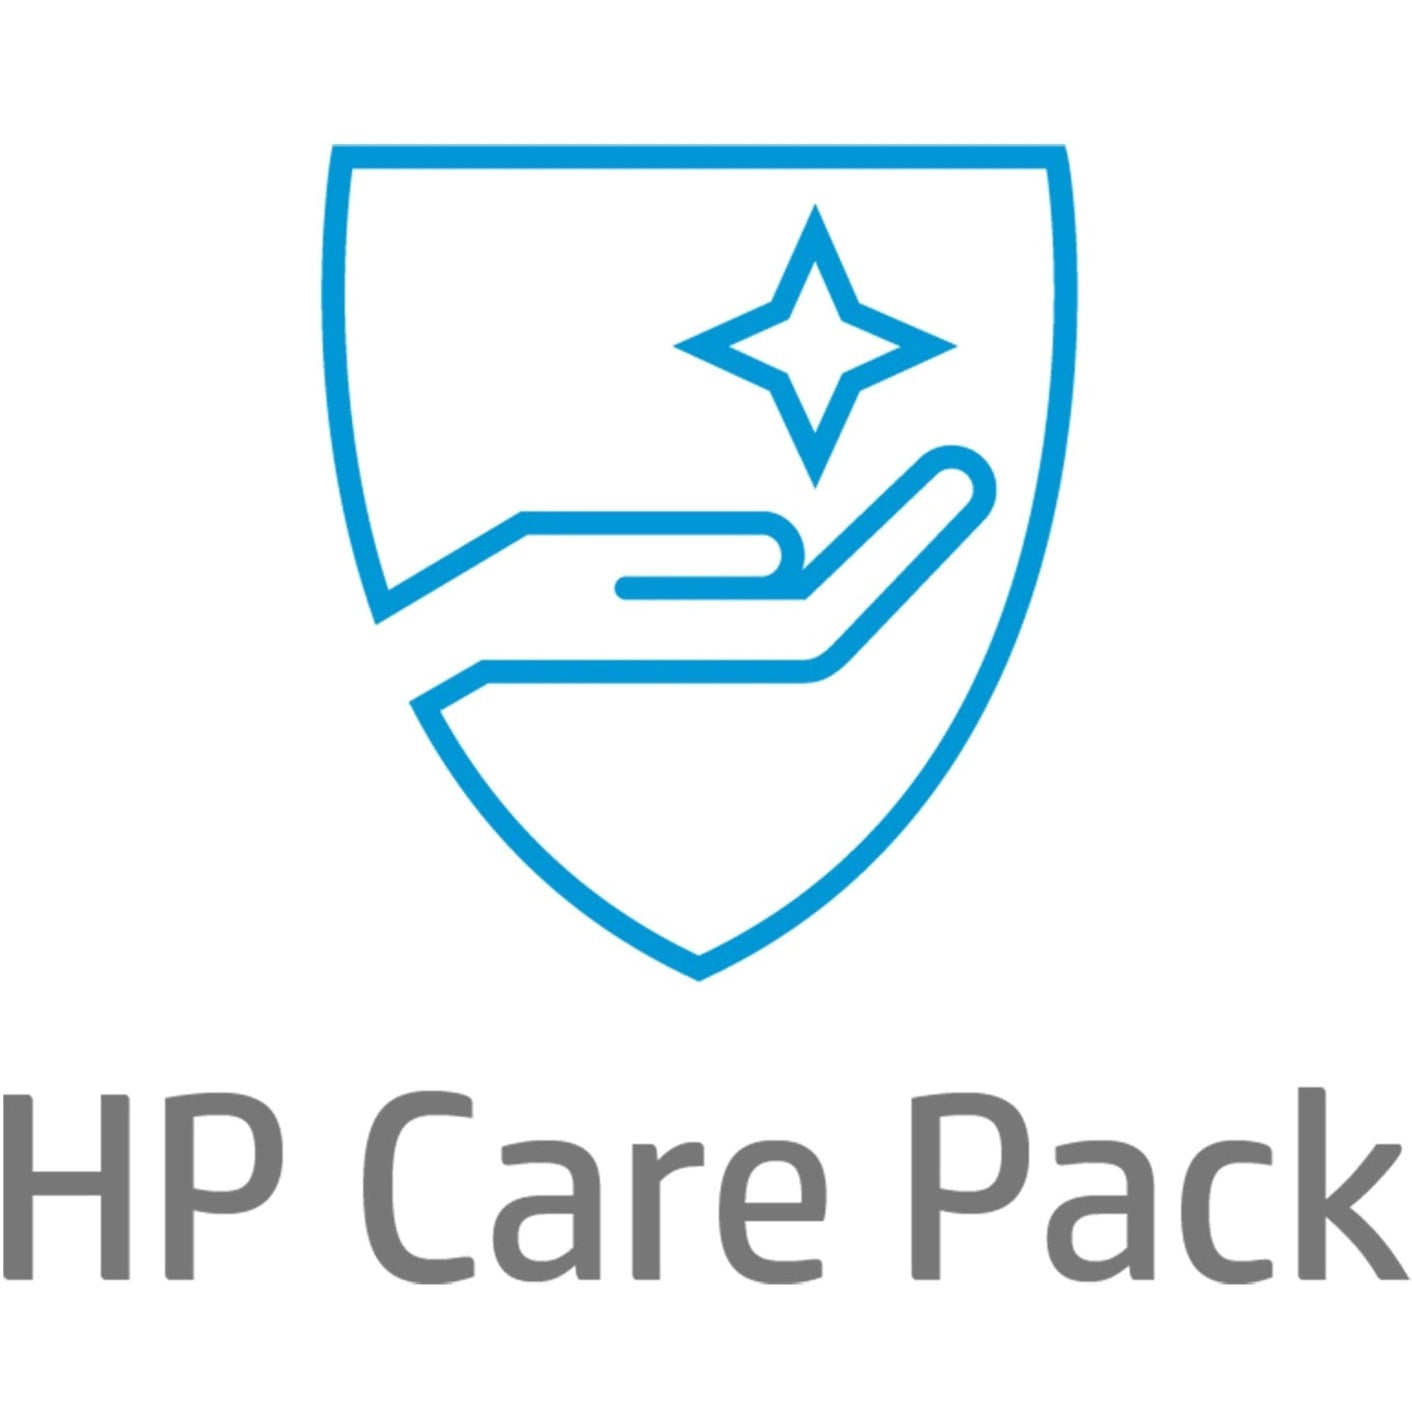 HP Care Pack - 3 Year - Service (UK703E)